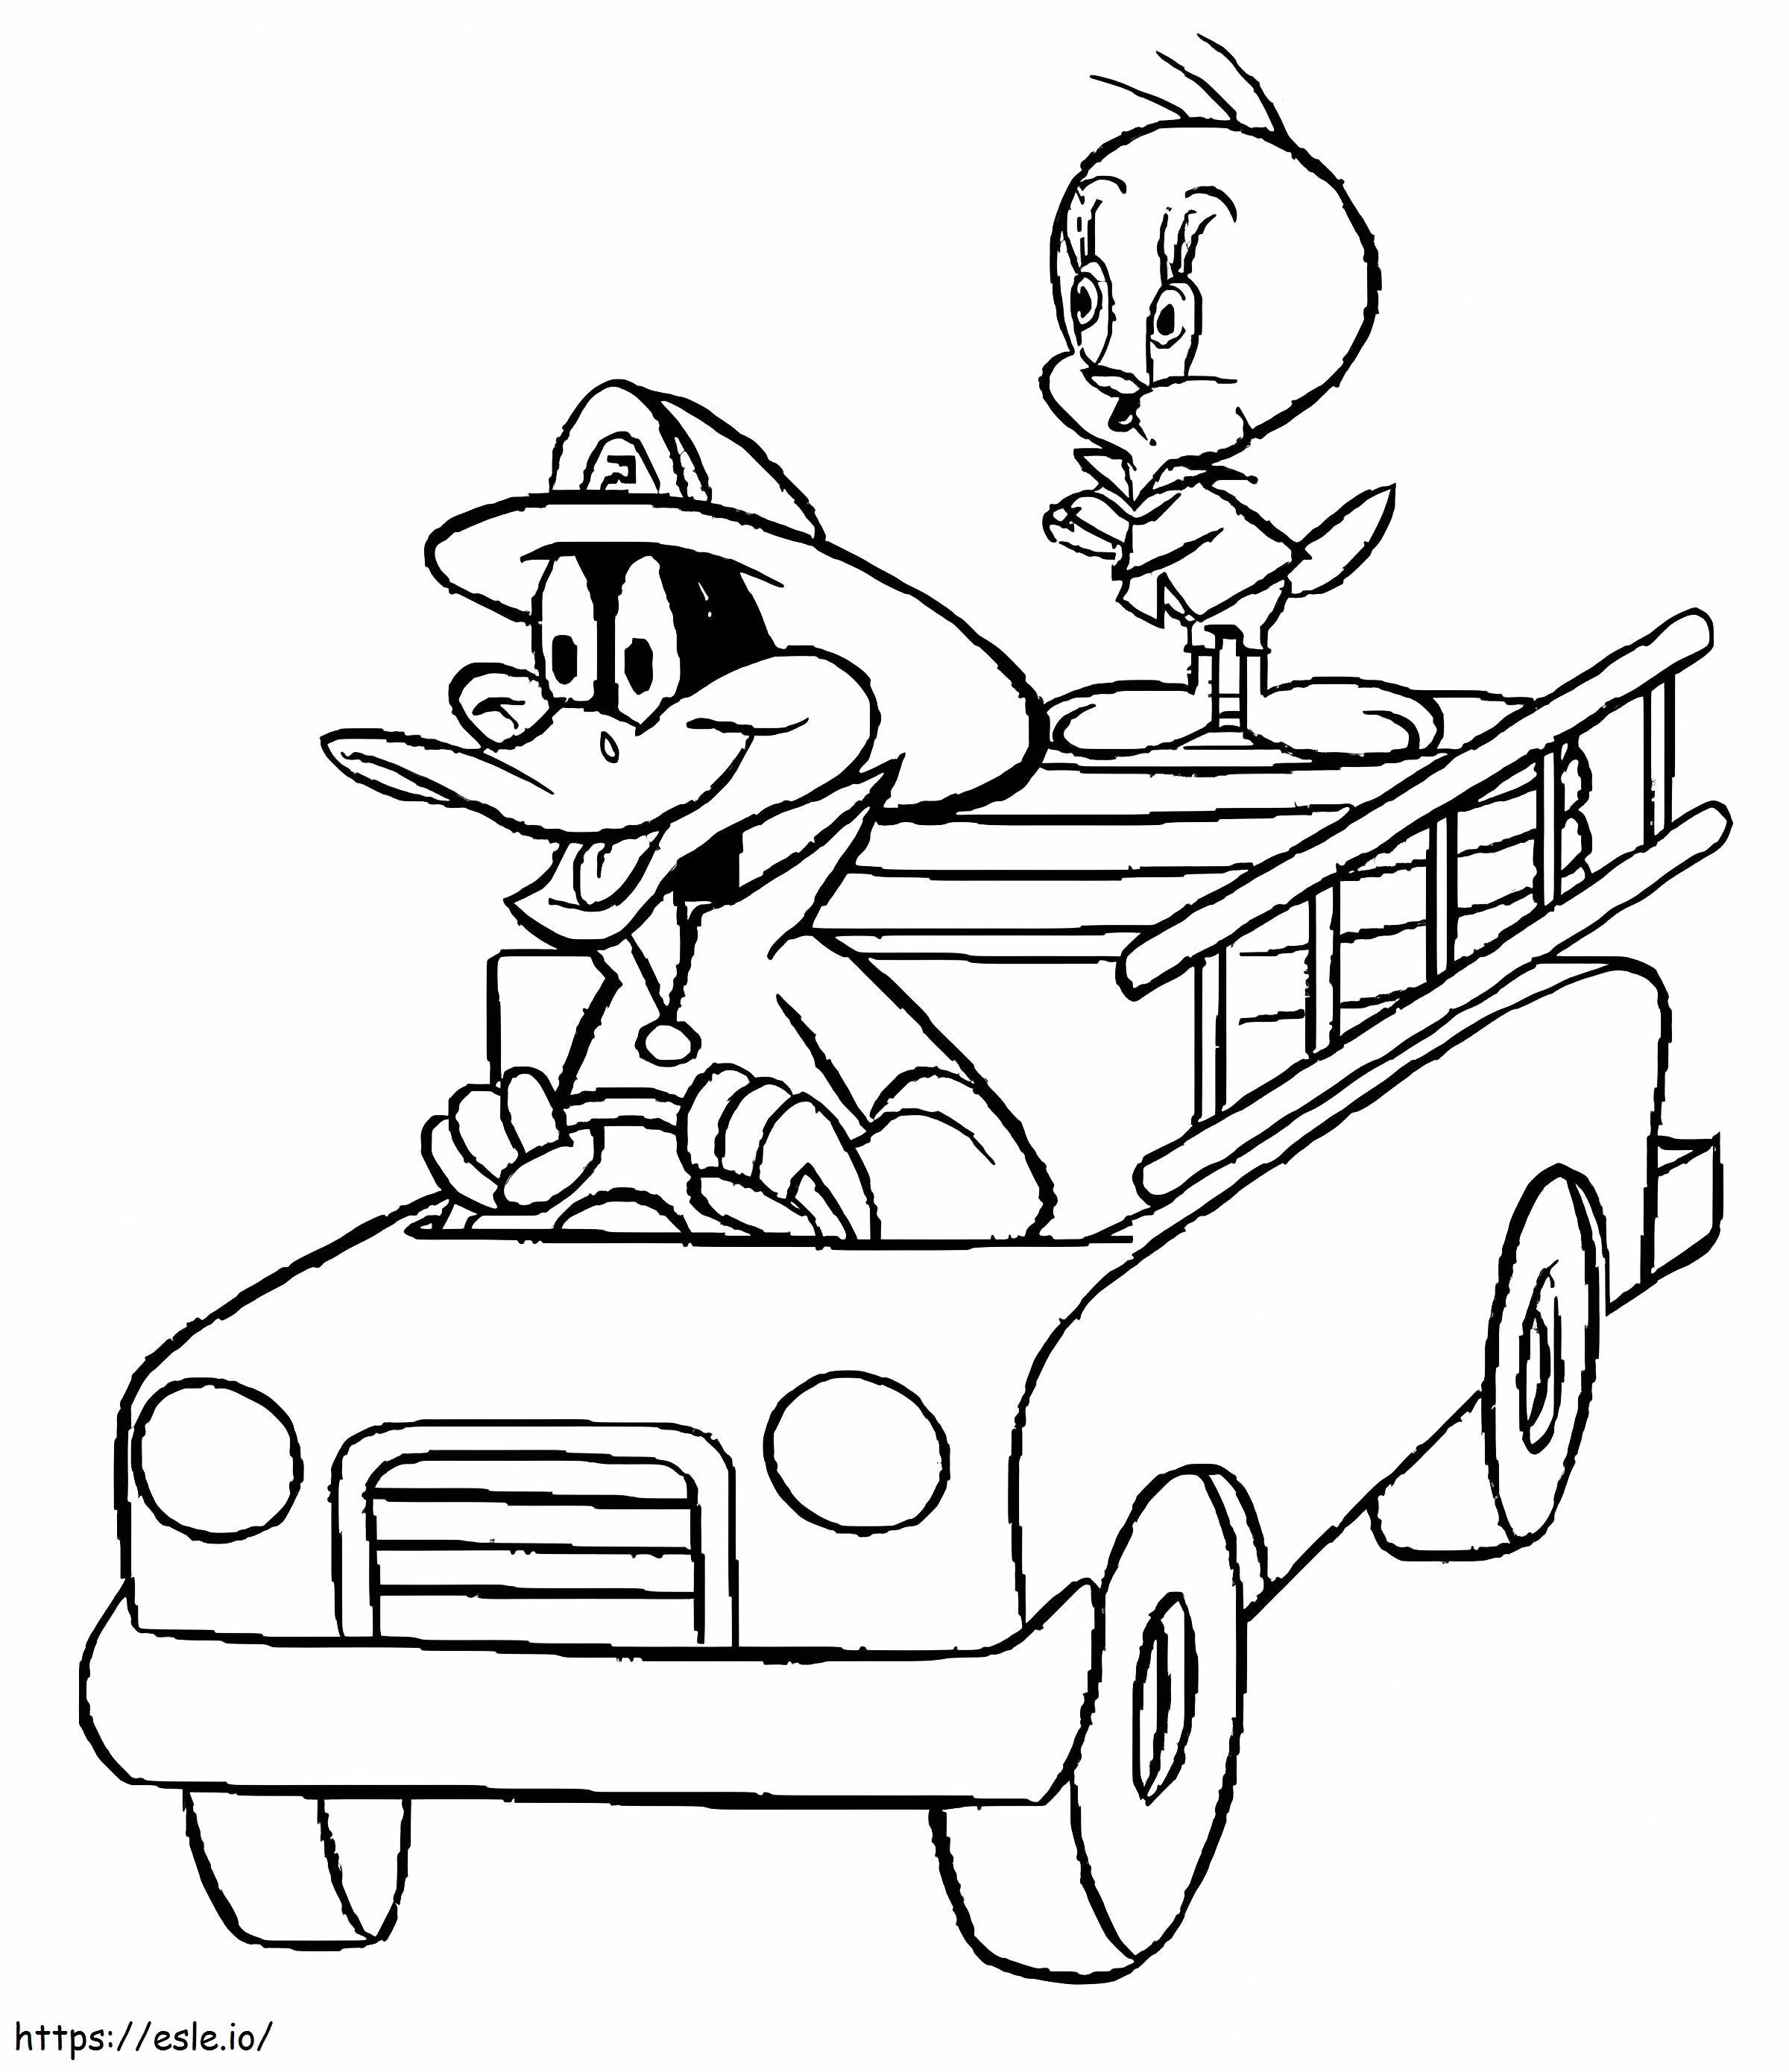 Rața Daffy și Tweety Pompierul de colorat